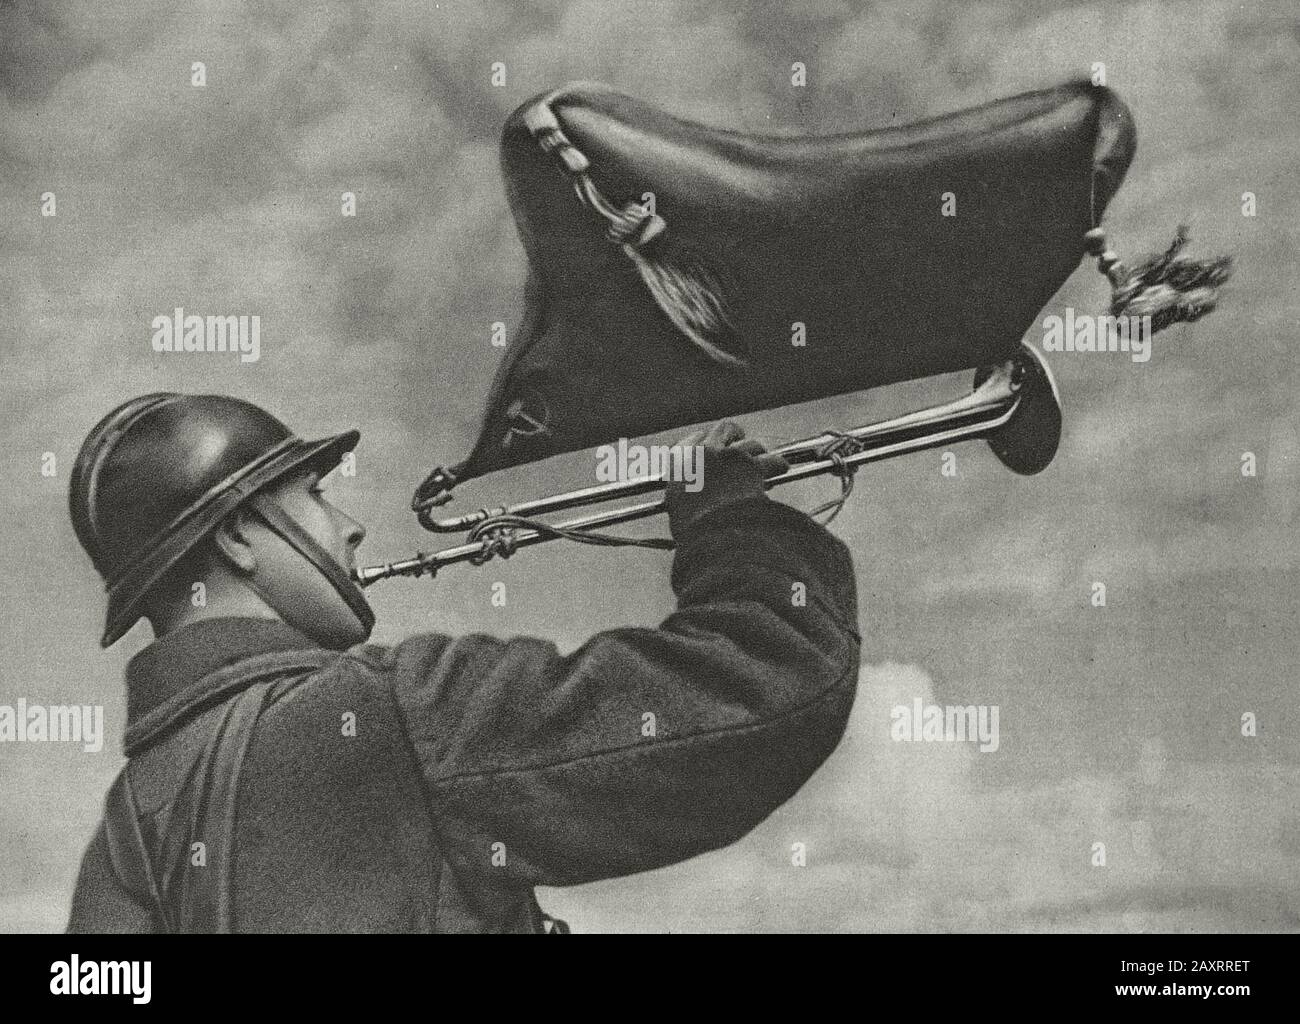 Red Army in 1930s. From soviet propaganda book of 1937. Bugler Stock Photo